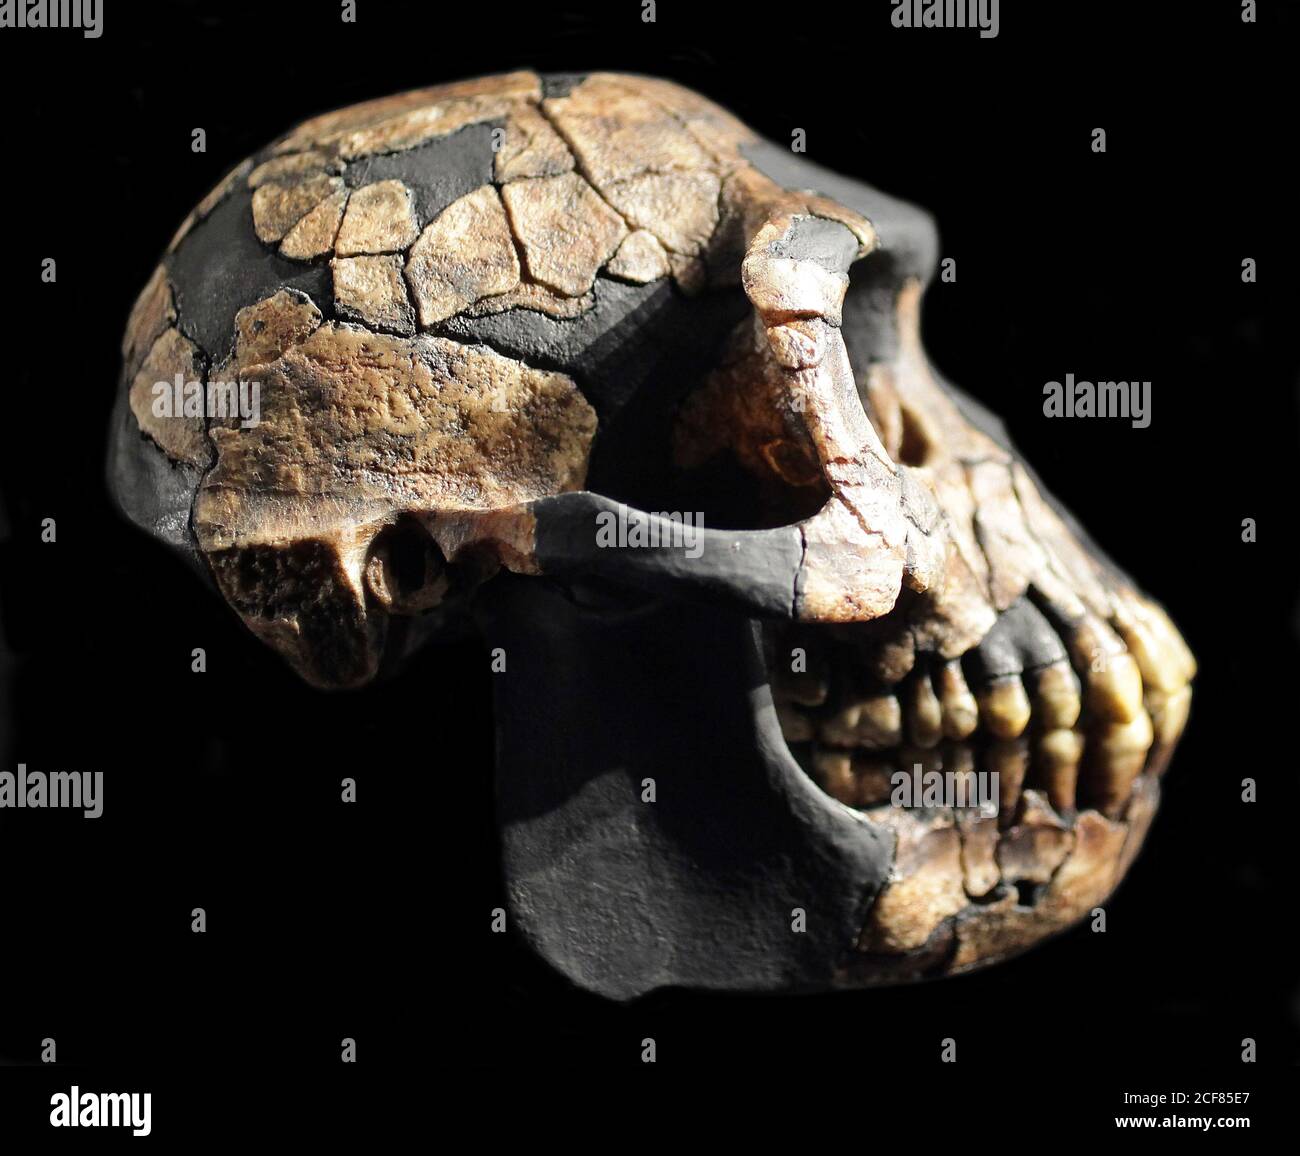 Ardipethecus ramidus genus of extinct hominine.Ardi skeleton fossilized partial female hominid skeleton.Ardipithecus ramidus - Extinct primate. Found in Awash Ethiopia.based on ARA-VP-6r Stock Photo